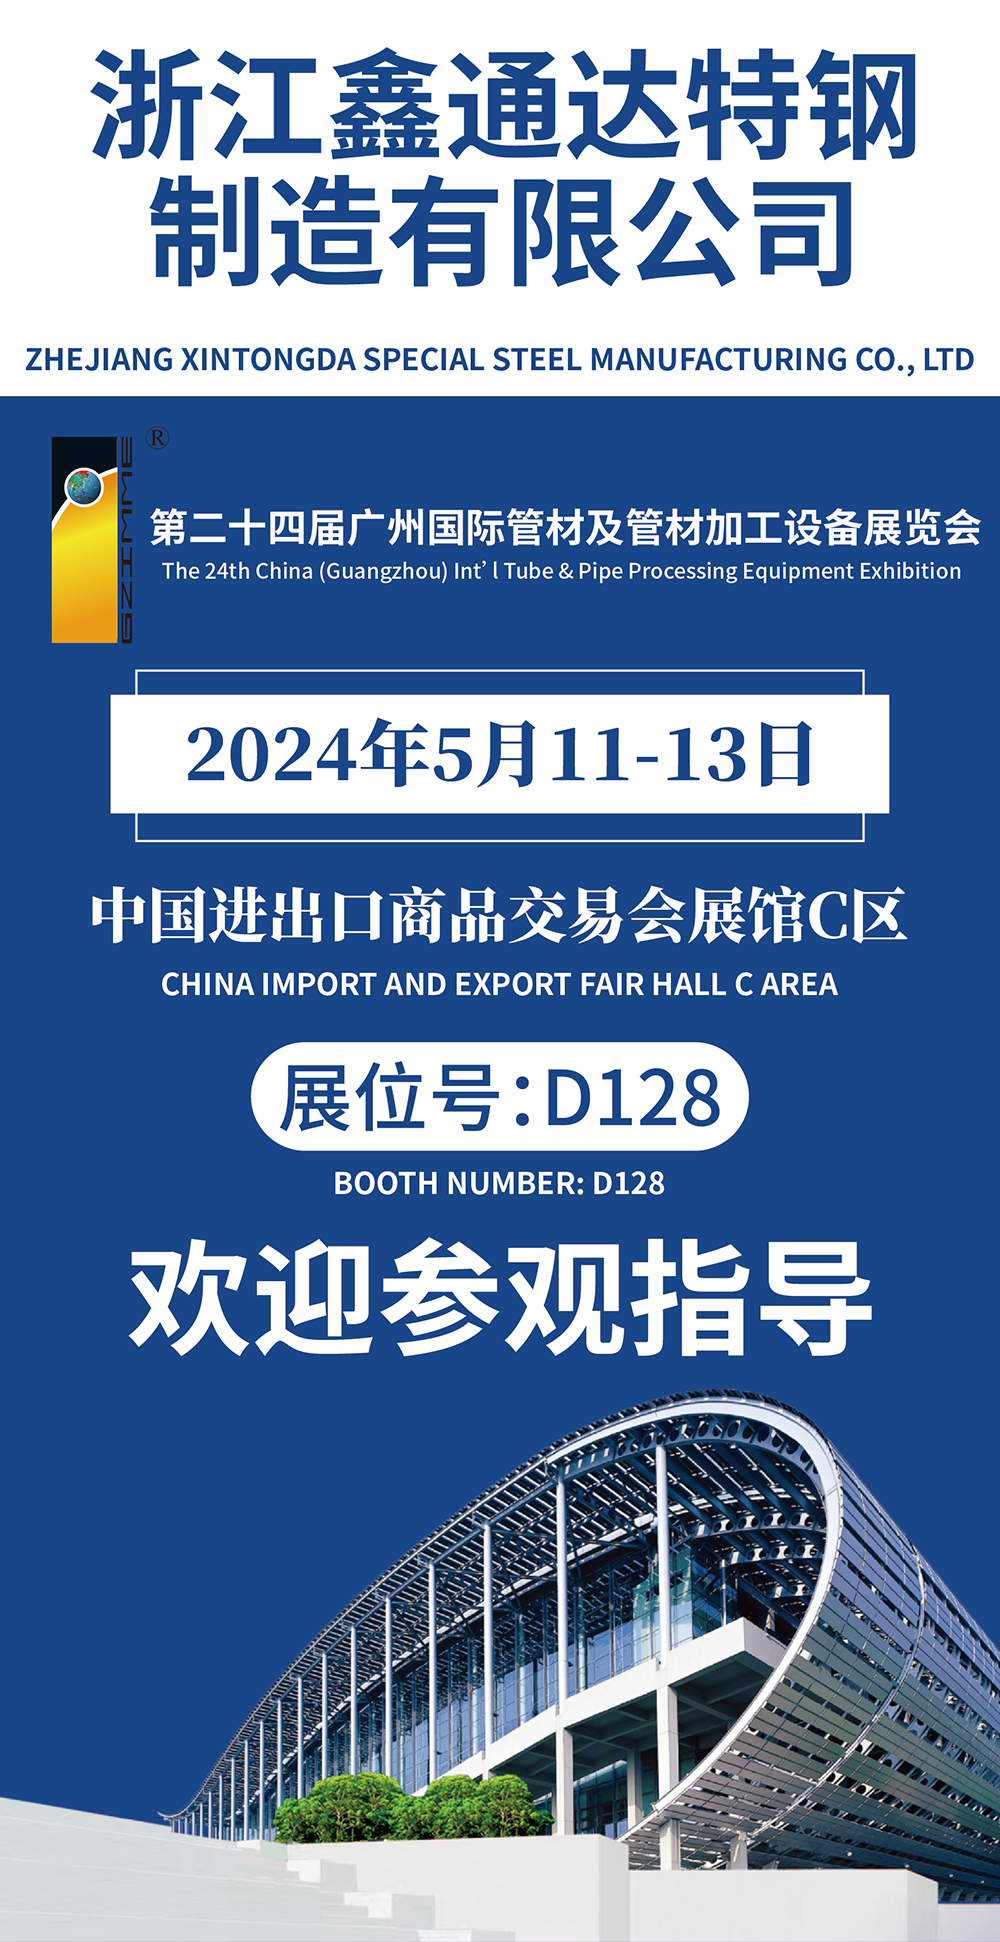 24th China Guangzhou TUBE PIPE Fair.jpg